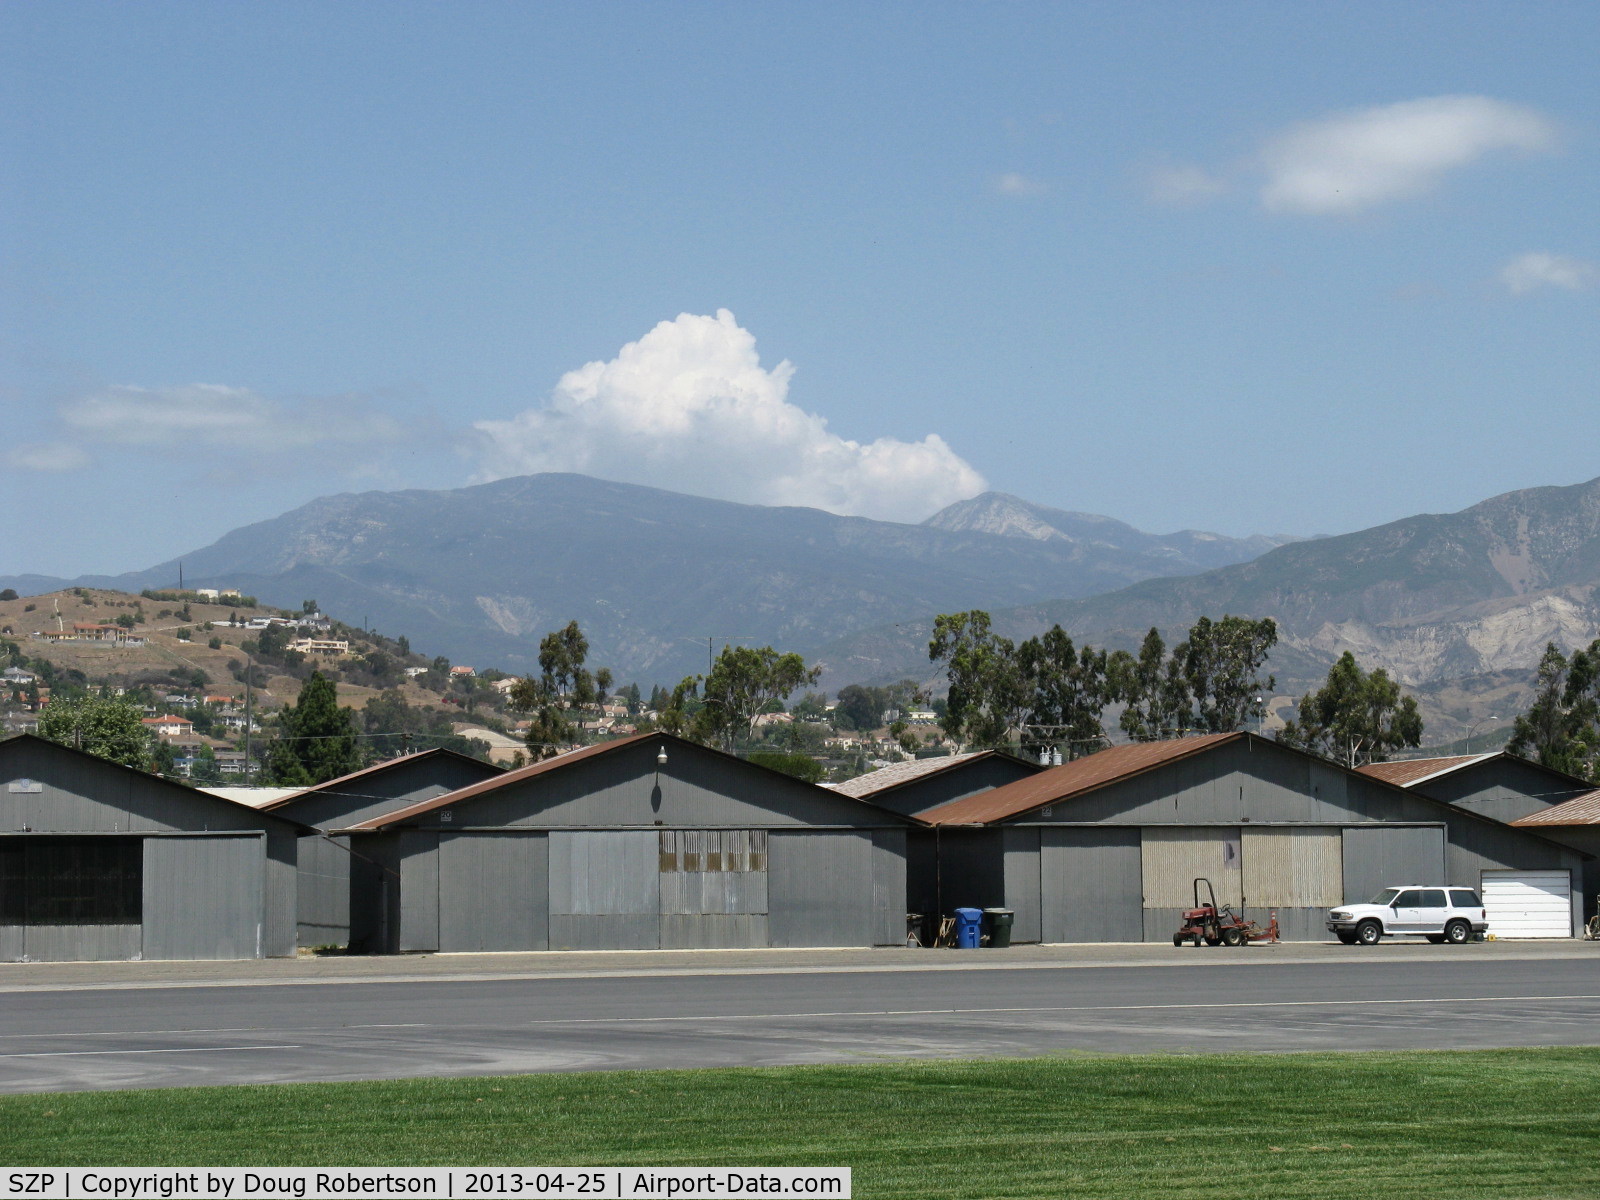 Santa Paula Airport (SZP) - Cumulus cloud building beyond 6,704' Hines Peak